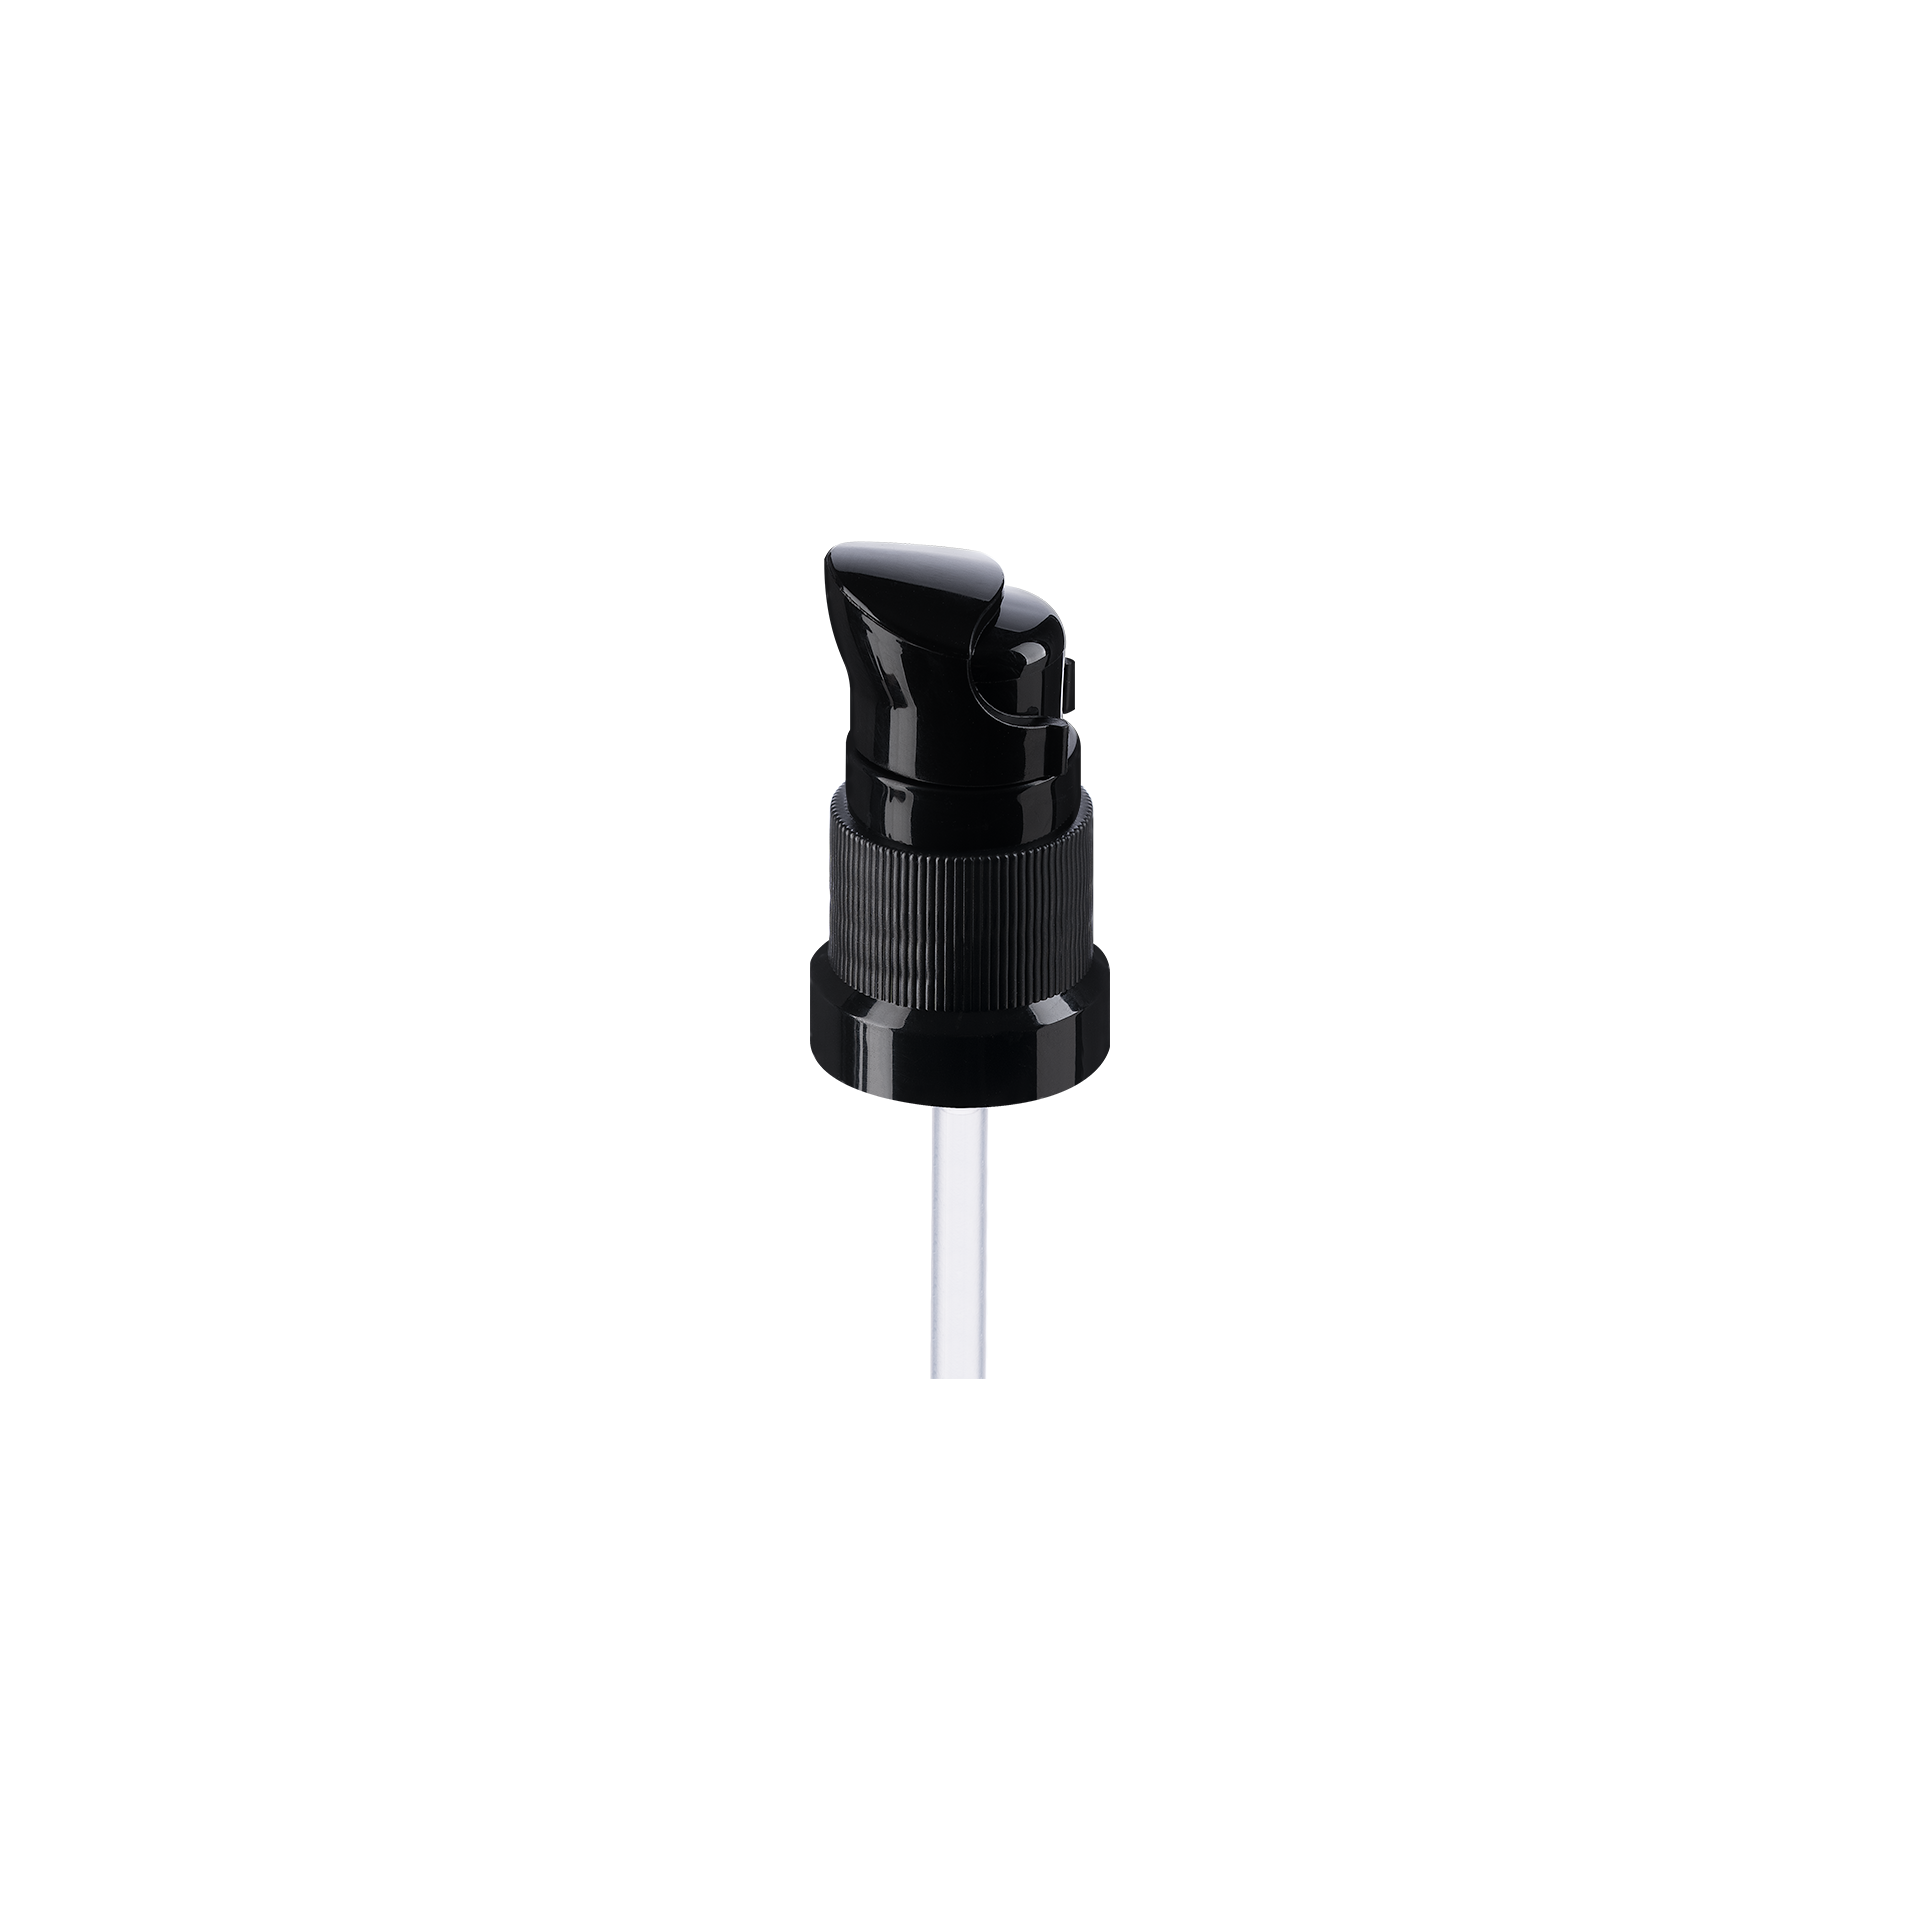 Lotion pump Metropolitan DIN18, PP, black, dose 0.10ml, black security clip (Jasmine10)